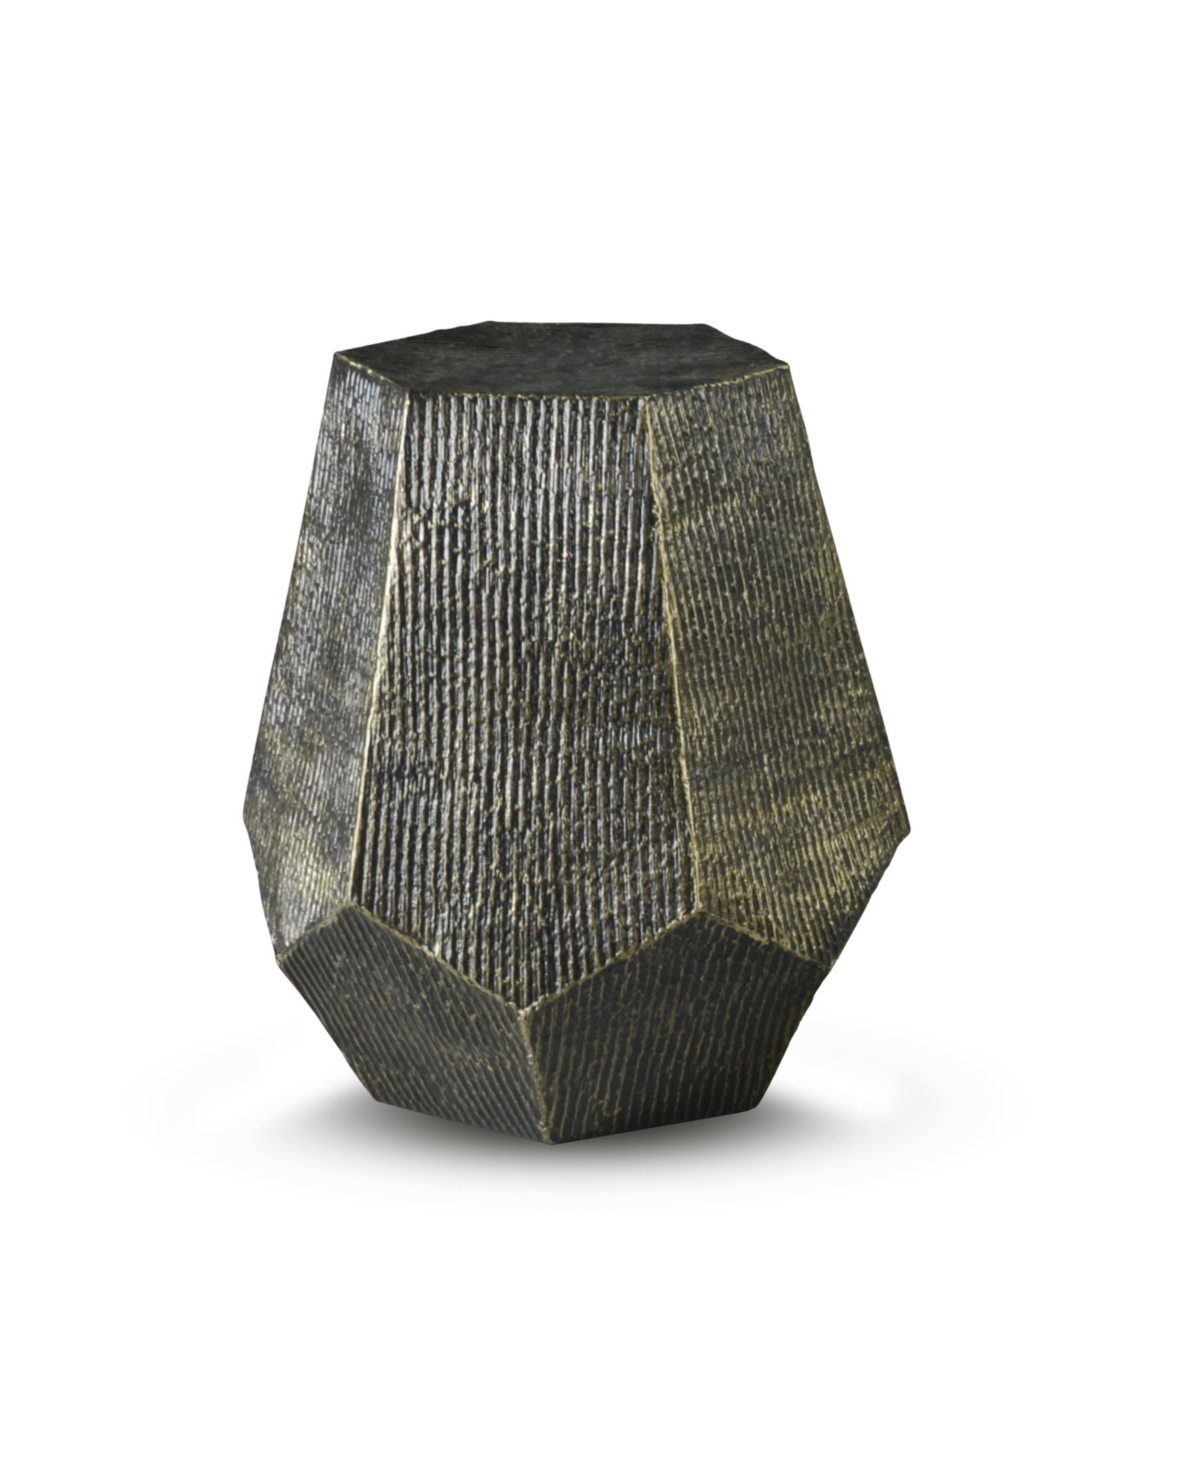 Steve Silver Donato 18.5" Iron Hexagonal Shape End Table In Brass